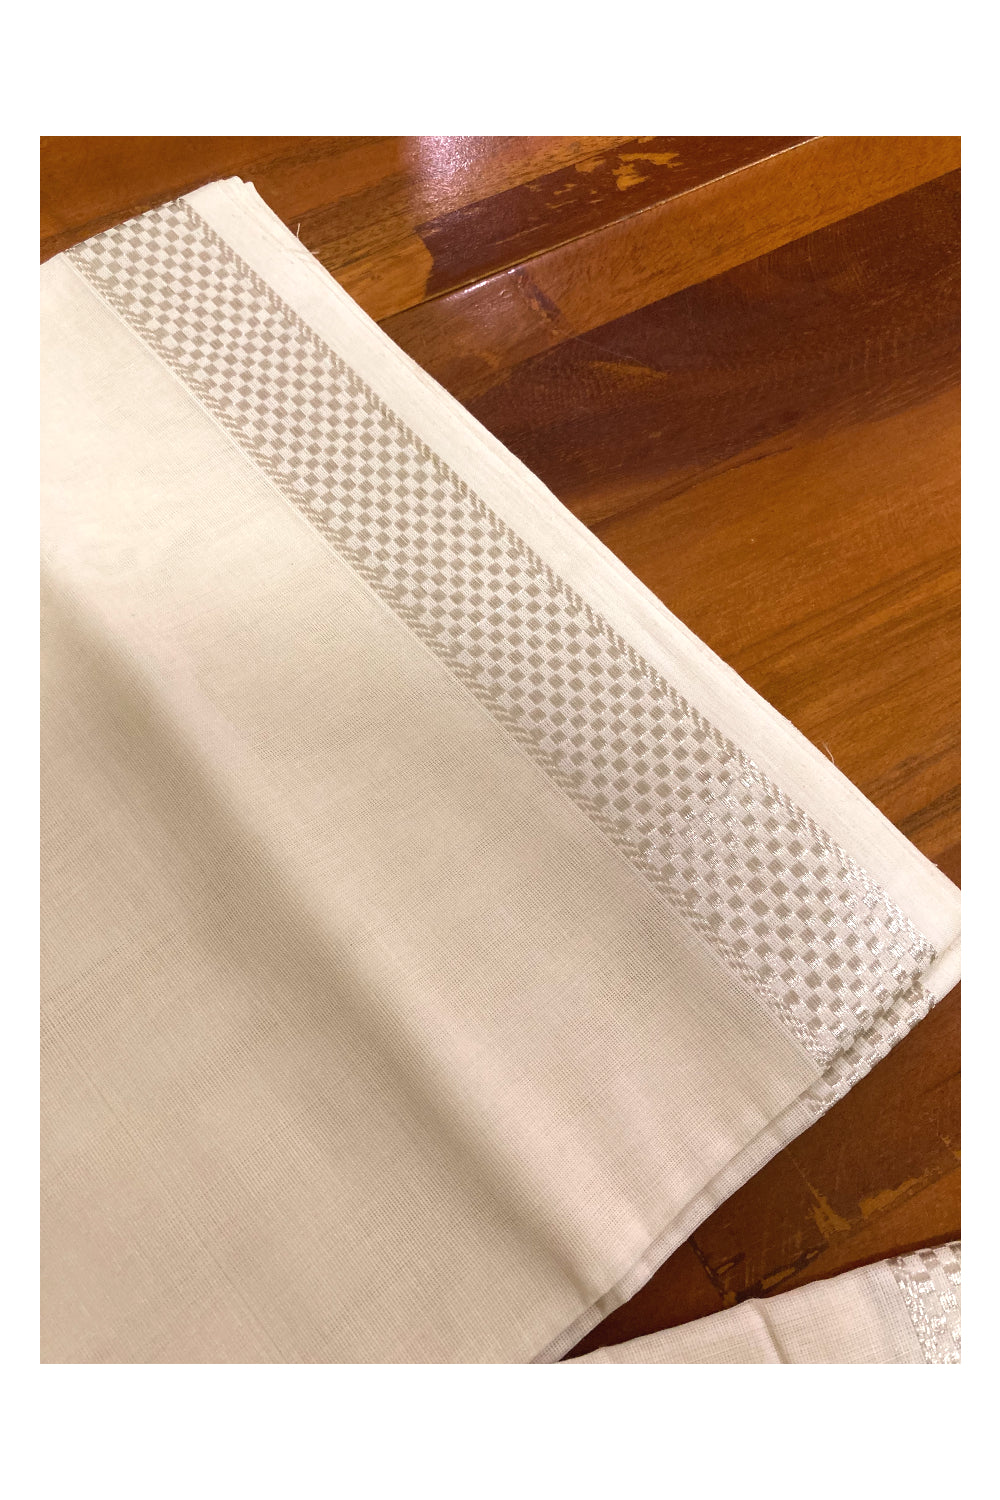 Southloom Premium Handloom Pure Cotton Mundu with Blue and Silver Kasavu Border (South Indian Dhoti)